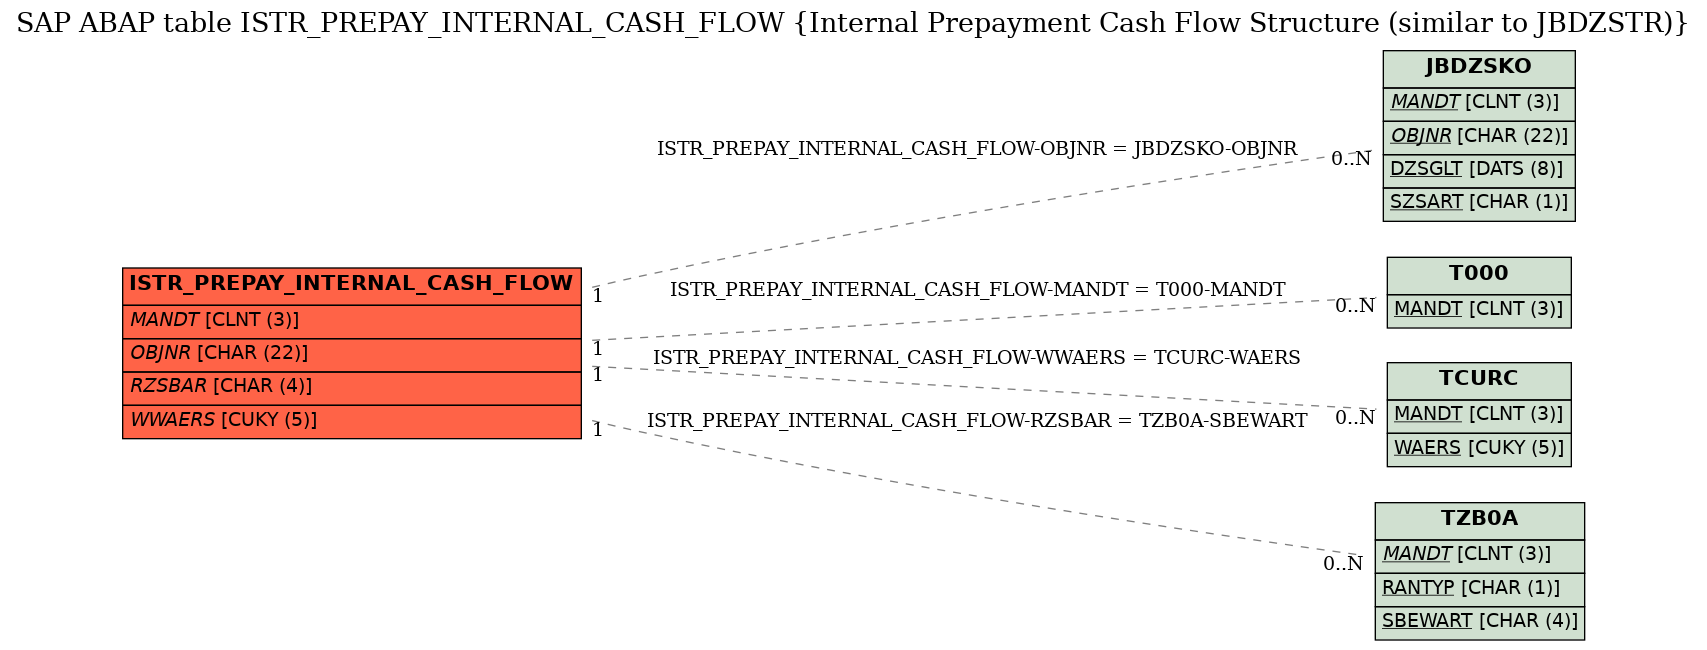 E-R Diagram for table ISTR_PREPAY_INTERNAL_CASH_FLOW (Internal Prepayment Cash Flow Structure (similar to JBDZSTR))